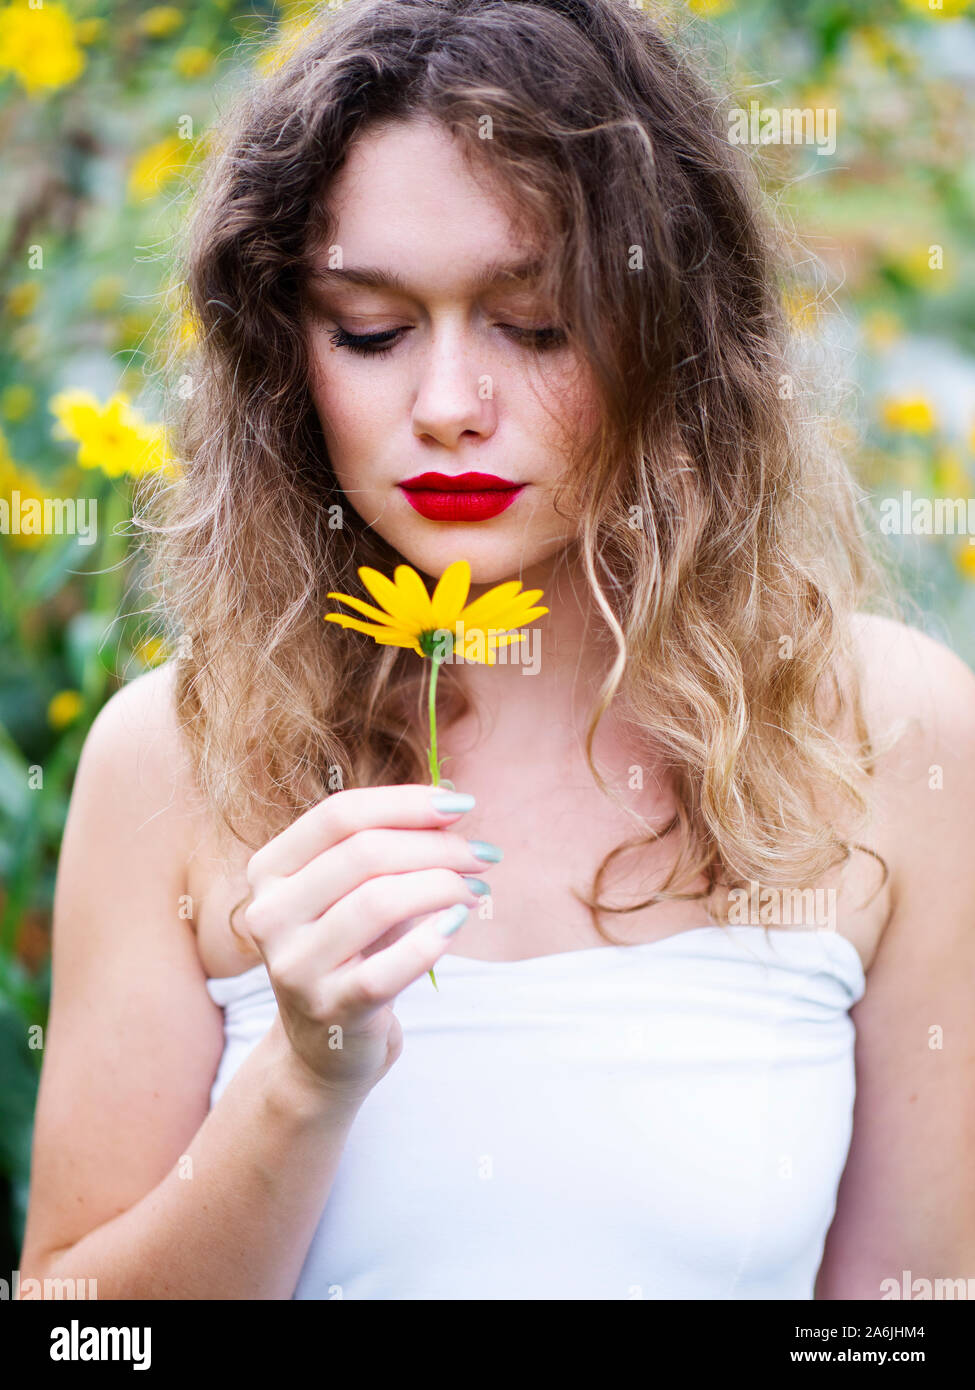 Beautiful young woman holding yellow flower Stock Photo